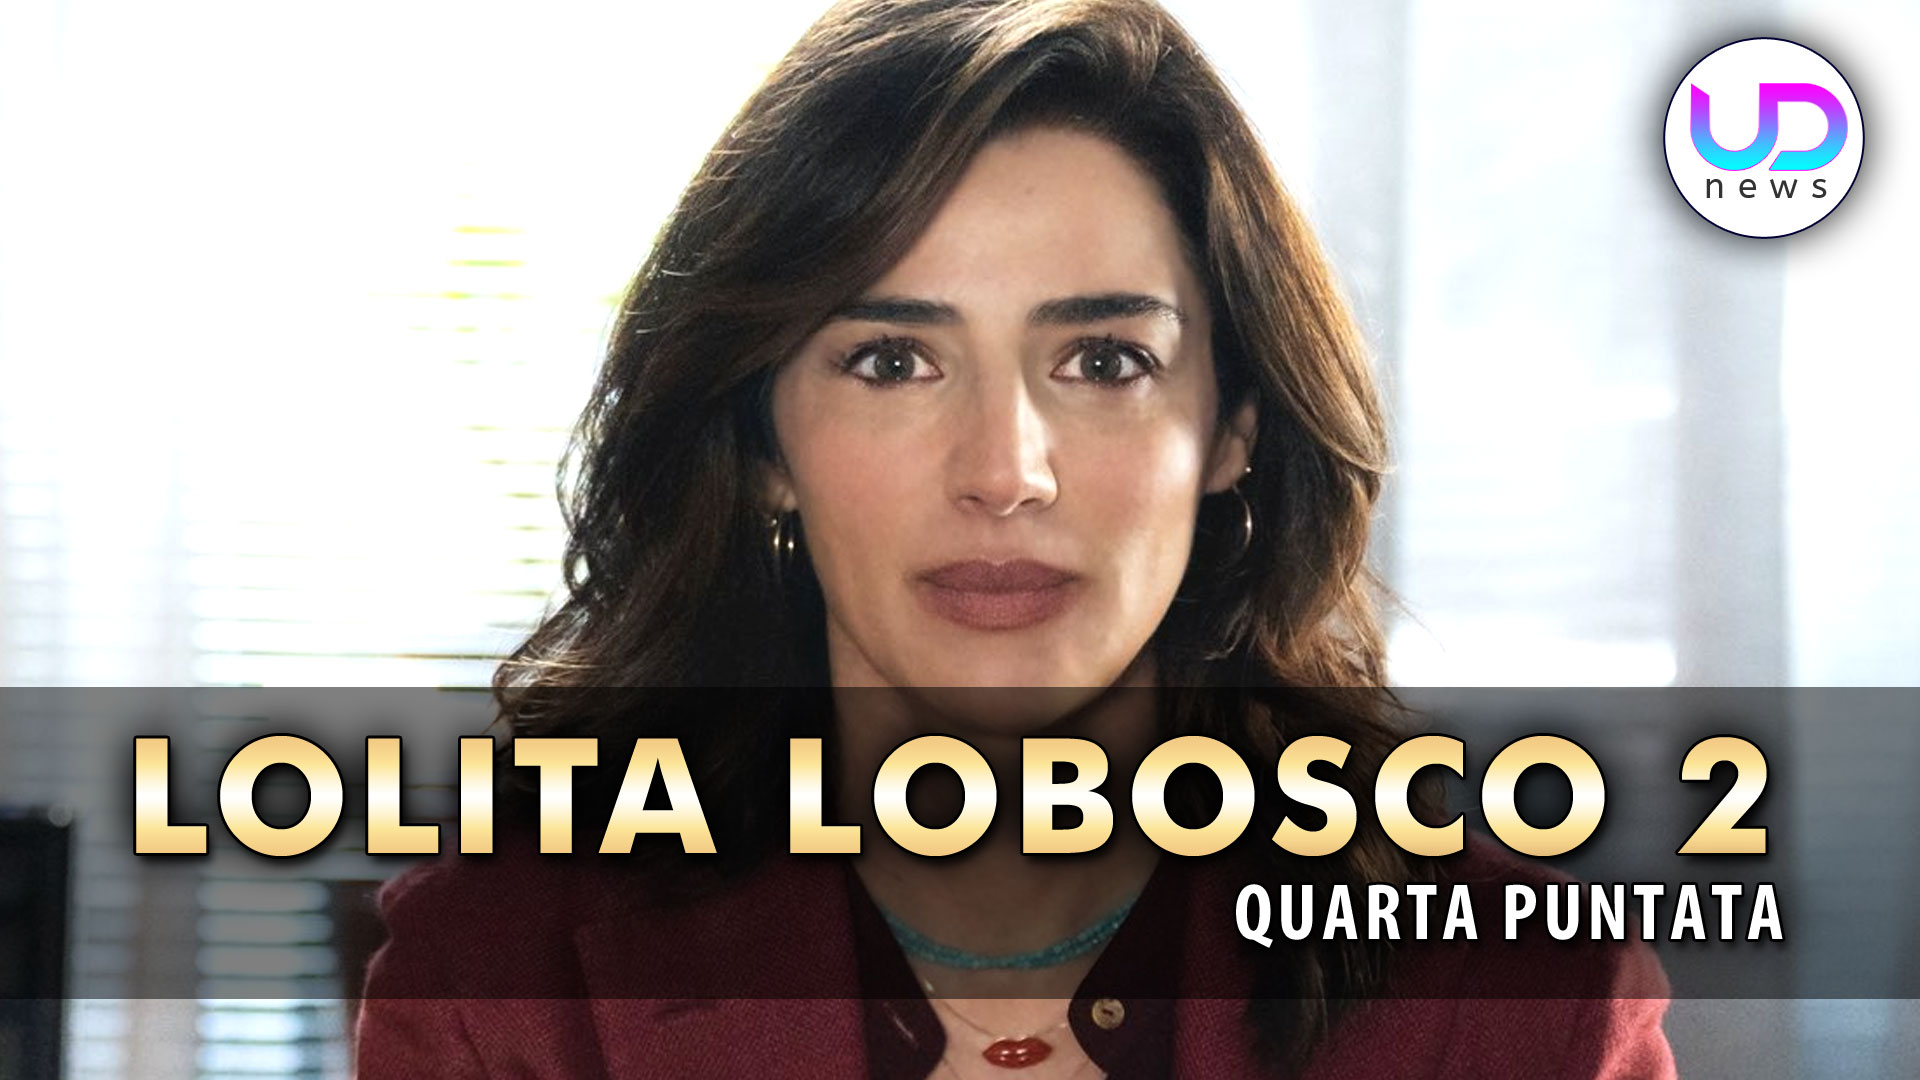 lolita-lobosco-2,-quarta-puntata:-domenico-viene-arrestato!-–-ud-news